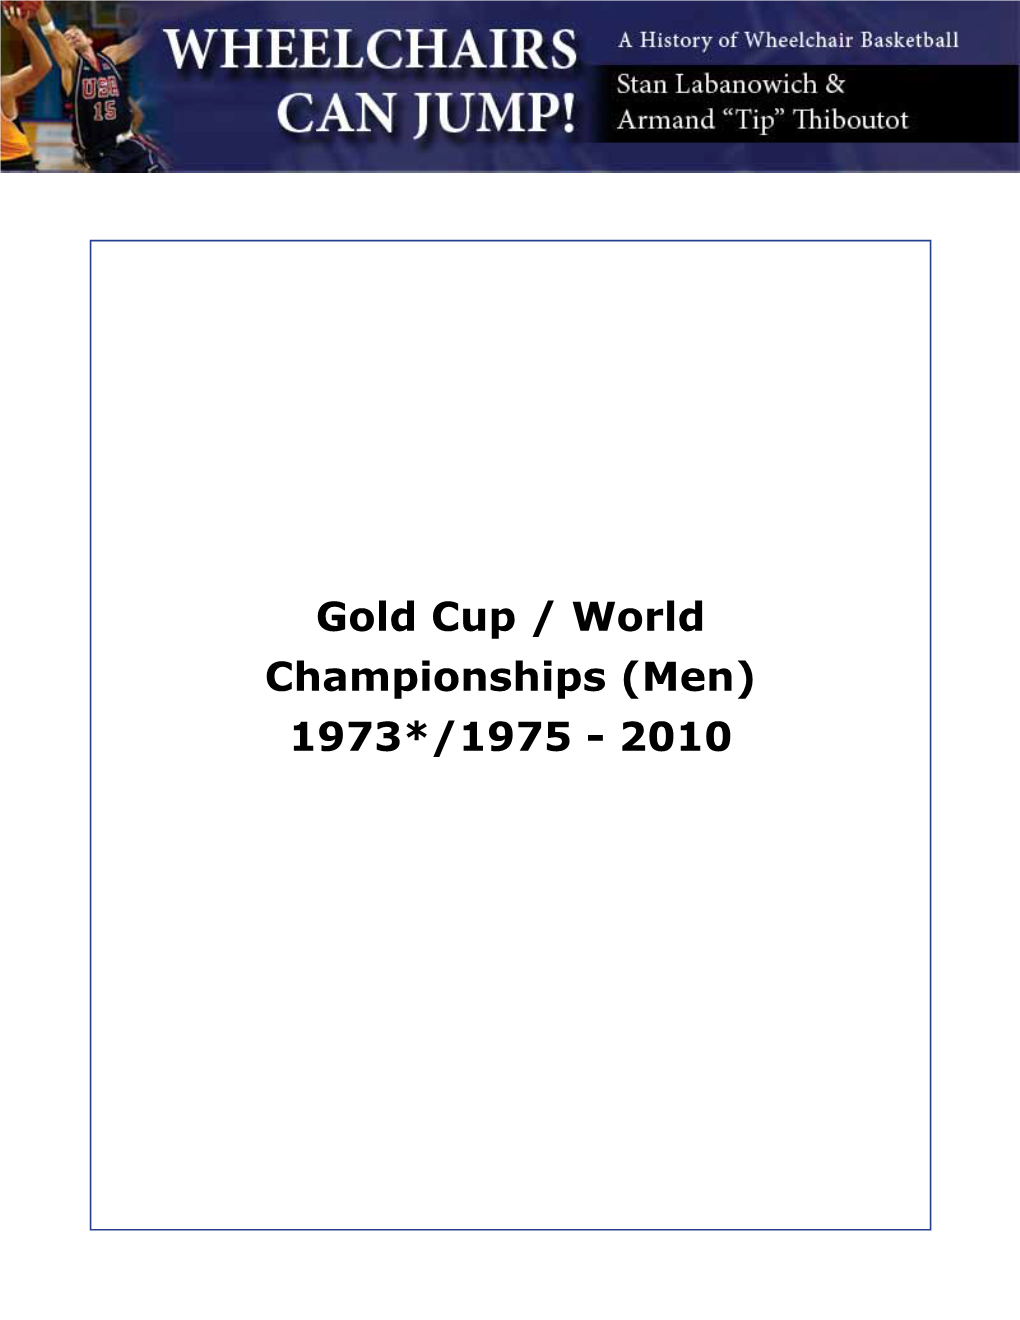 Gold Cup / World Championships (Men) 1973*/1975 - 2010 Cumulative Data